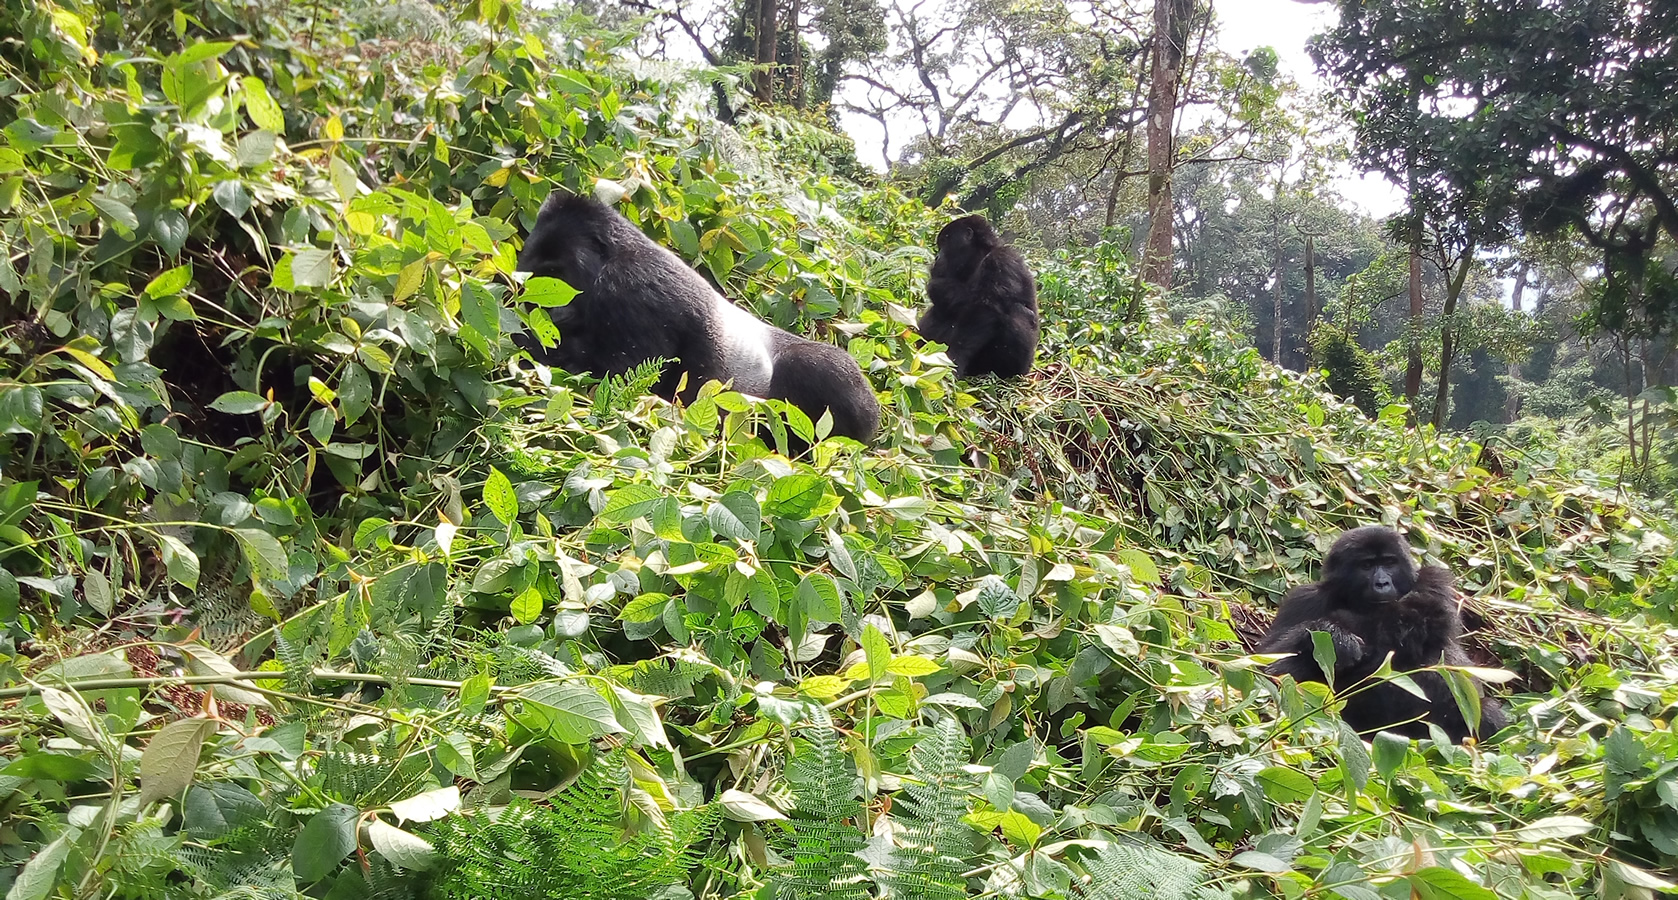 Top 5 Rental Cars Ideal For A Gorilla Safari in Uganda